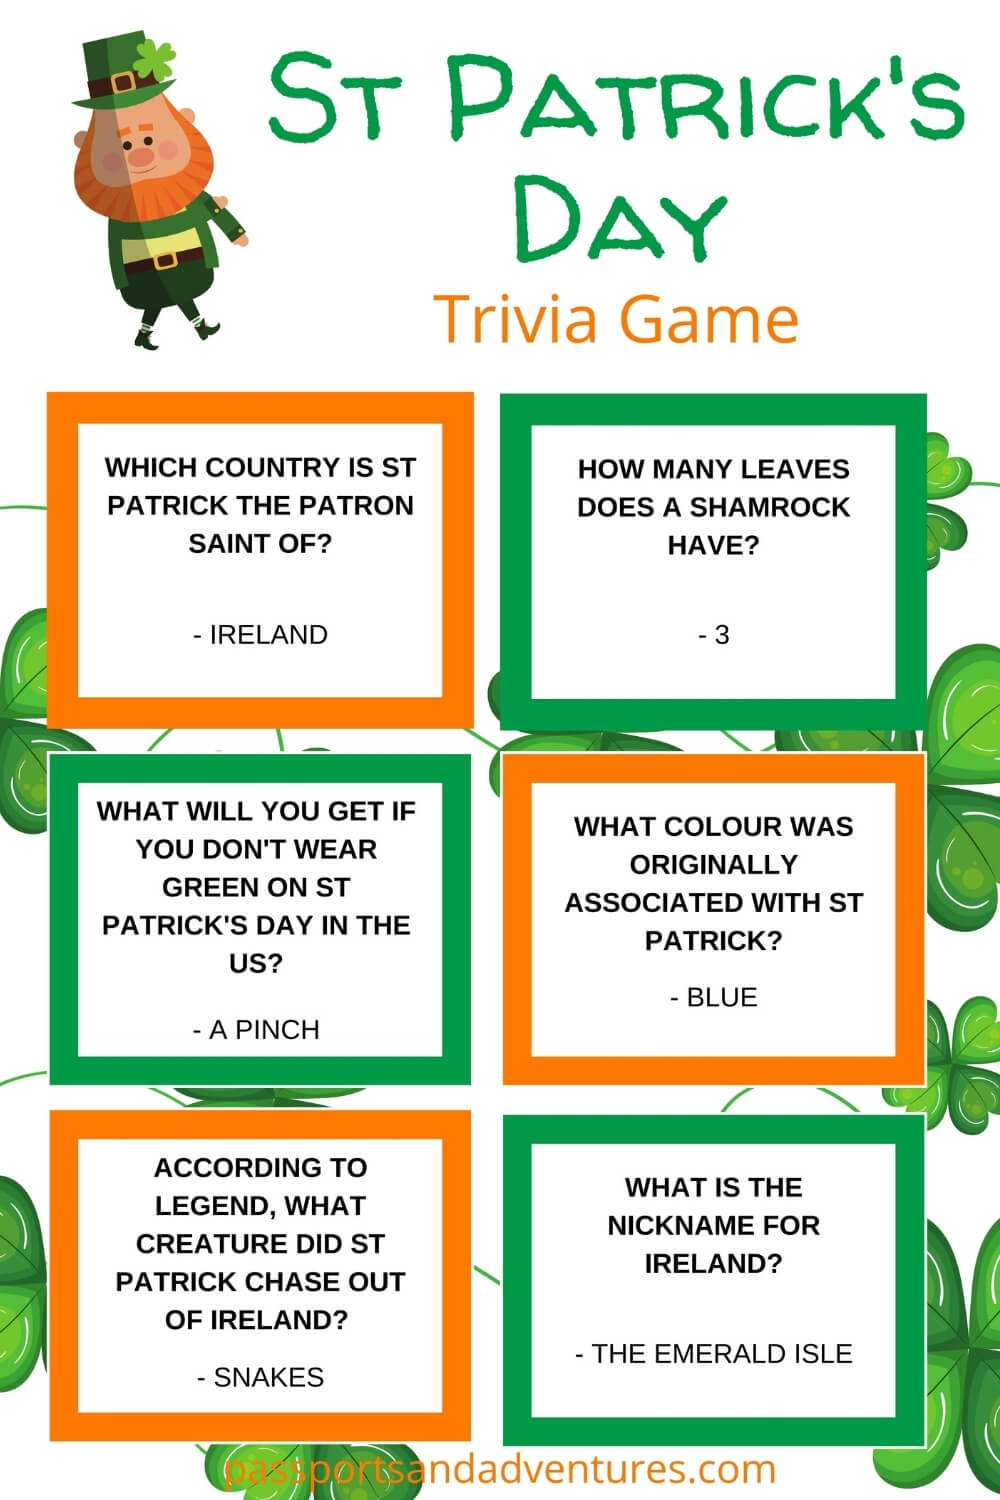 St Patrick's Day Trivia Game